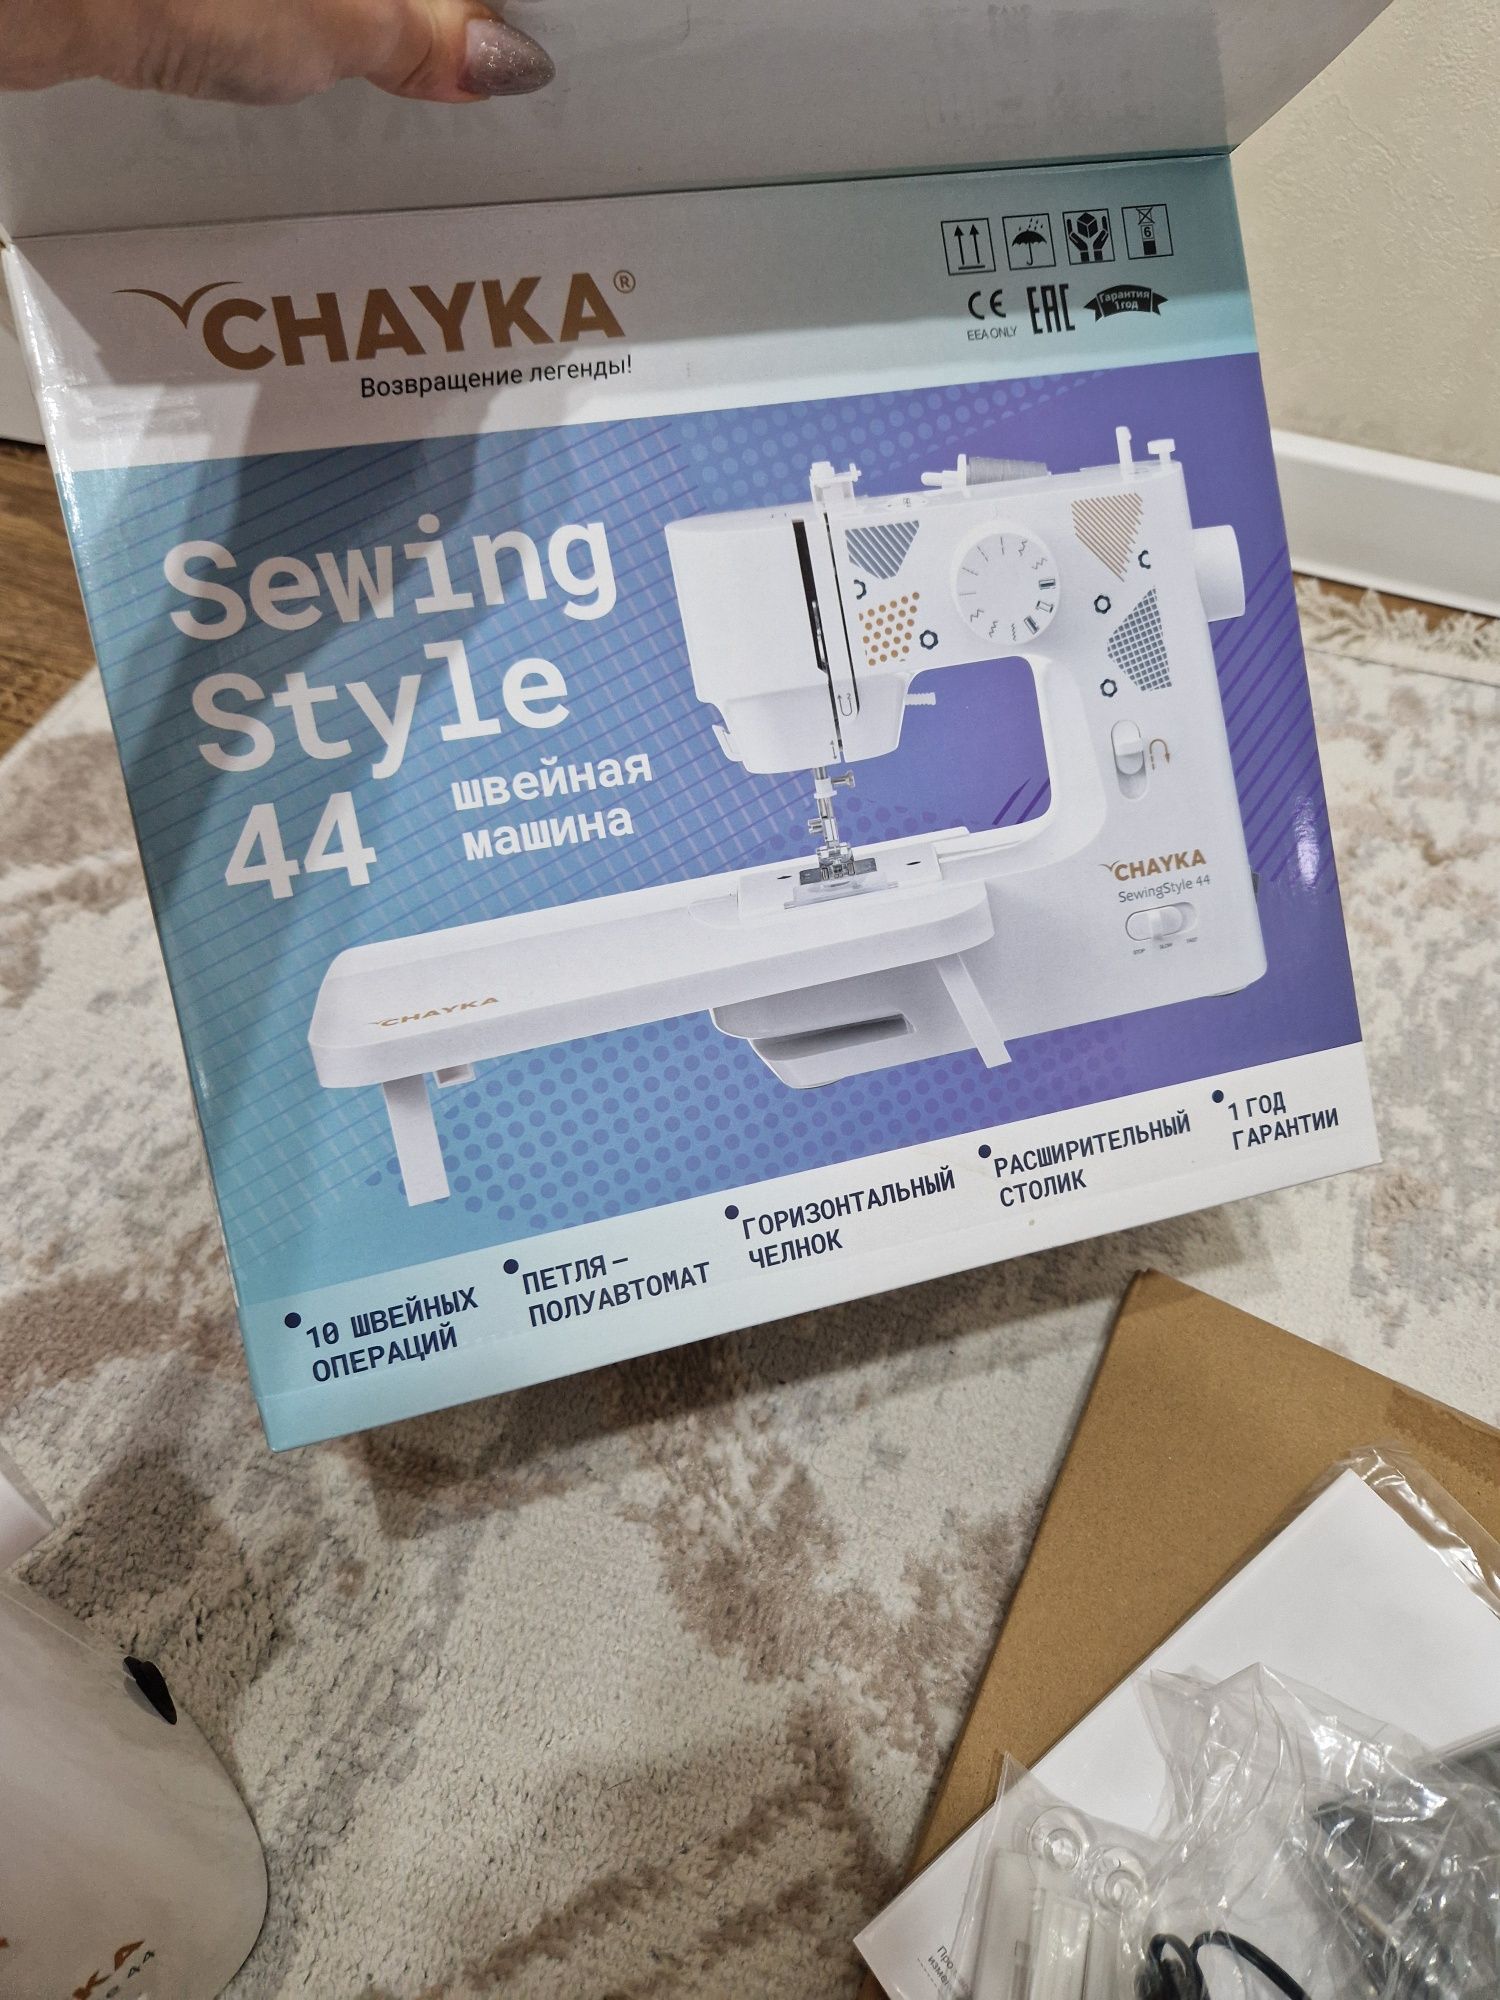 Швейная машинка Chayka sewing style 44